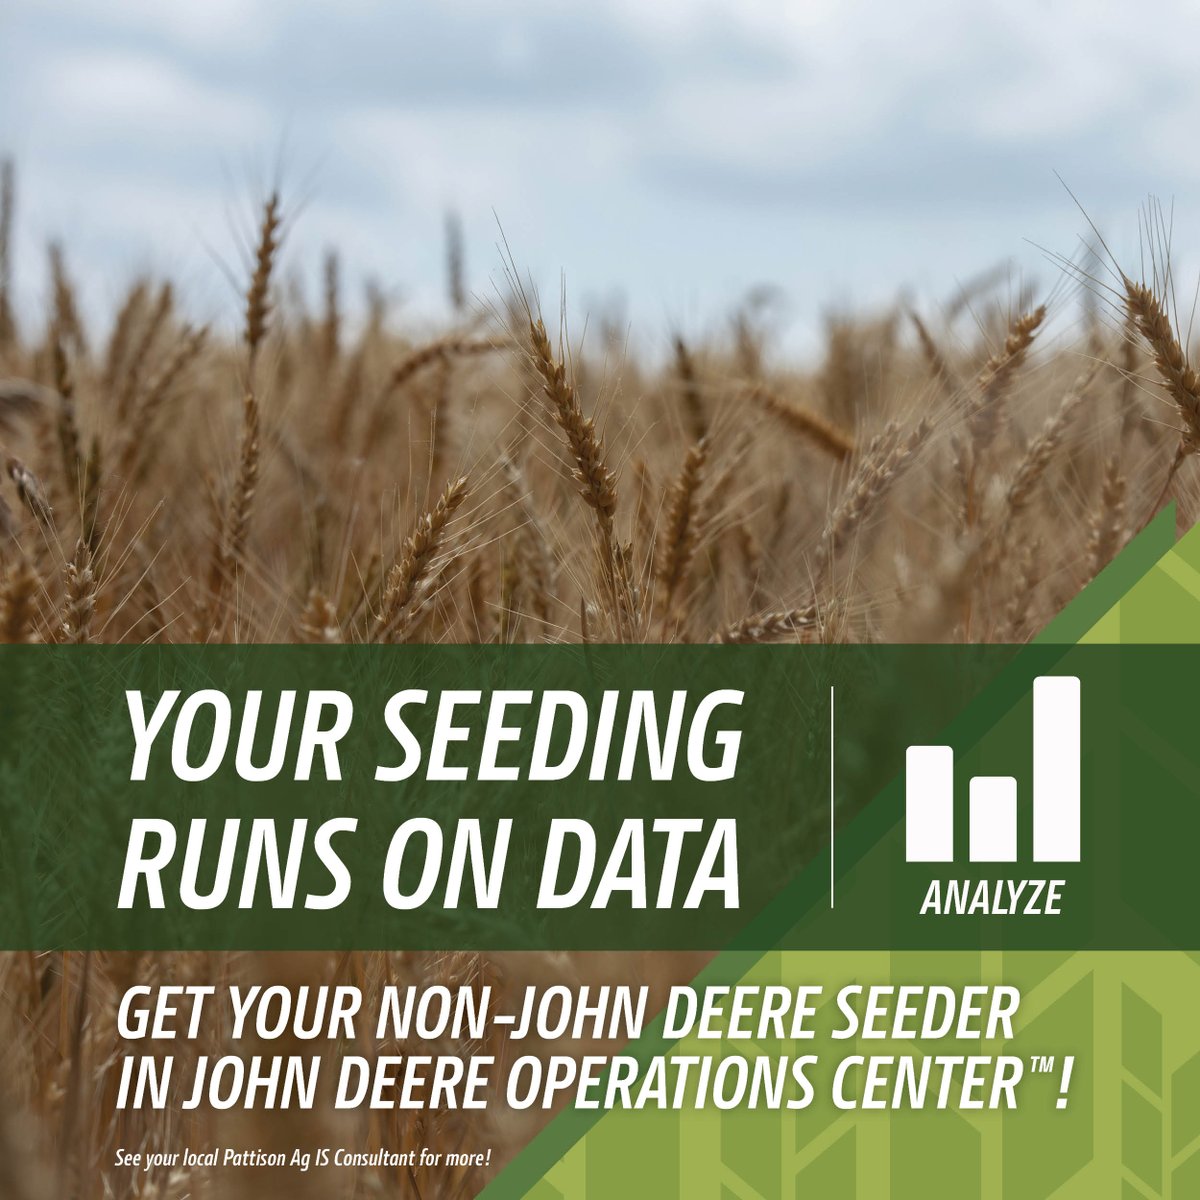 Your Seeding Runs On Data! Get your non-John Deere seeder in John Deere Operation Center! ow.ly/ijnf50QRl20 #PattisonAg